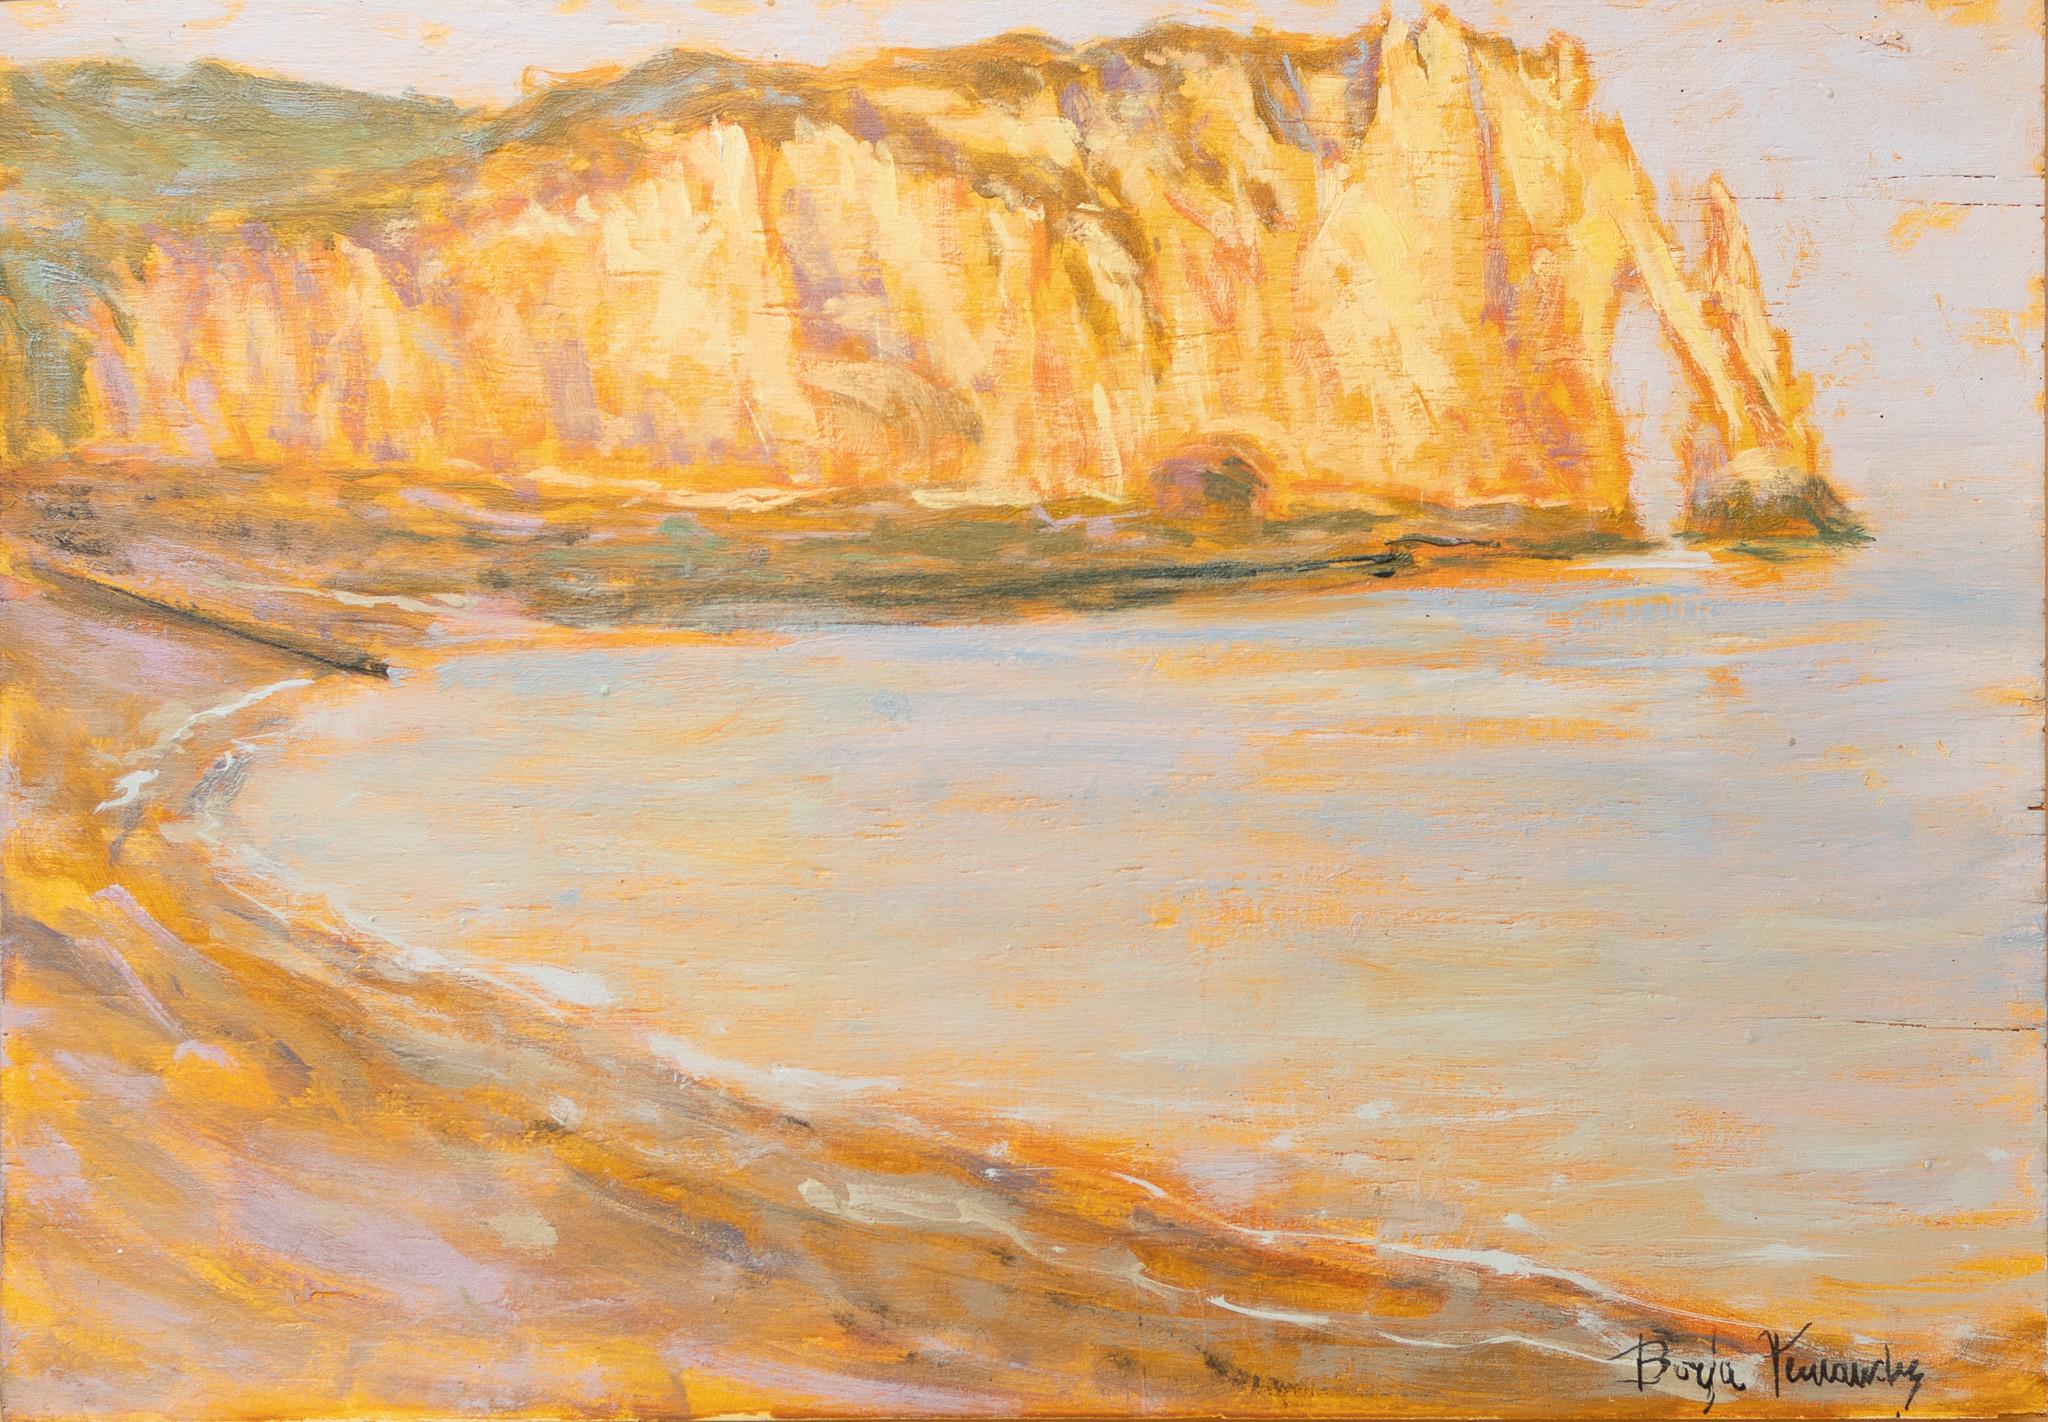 Borja Fernandez Landscape Painting - "Falaise D'aval" French Coastal Landscape with Cliffs at Sunset